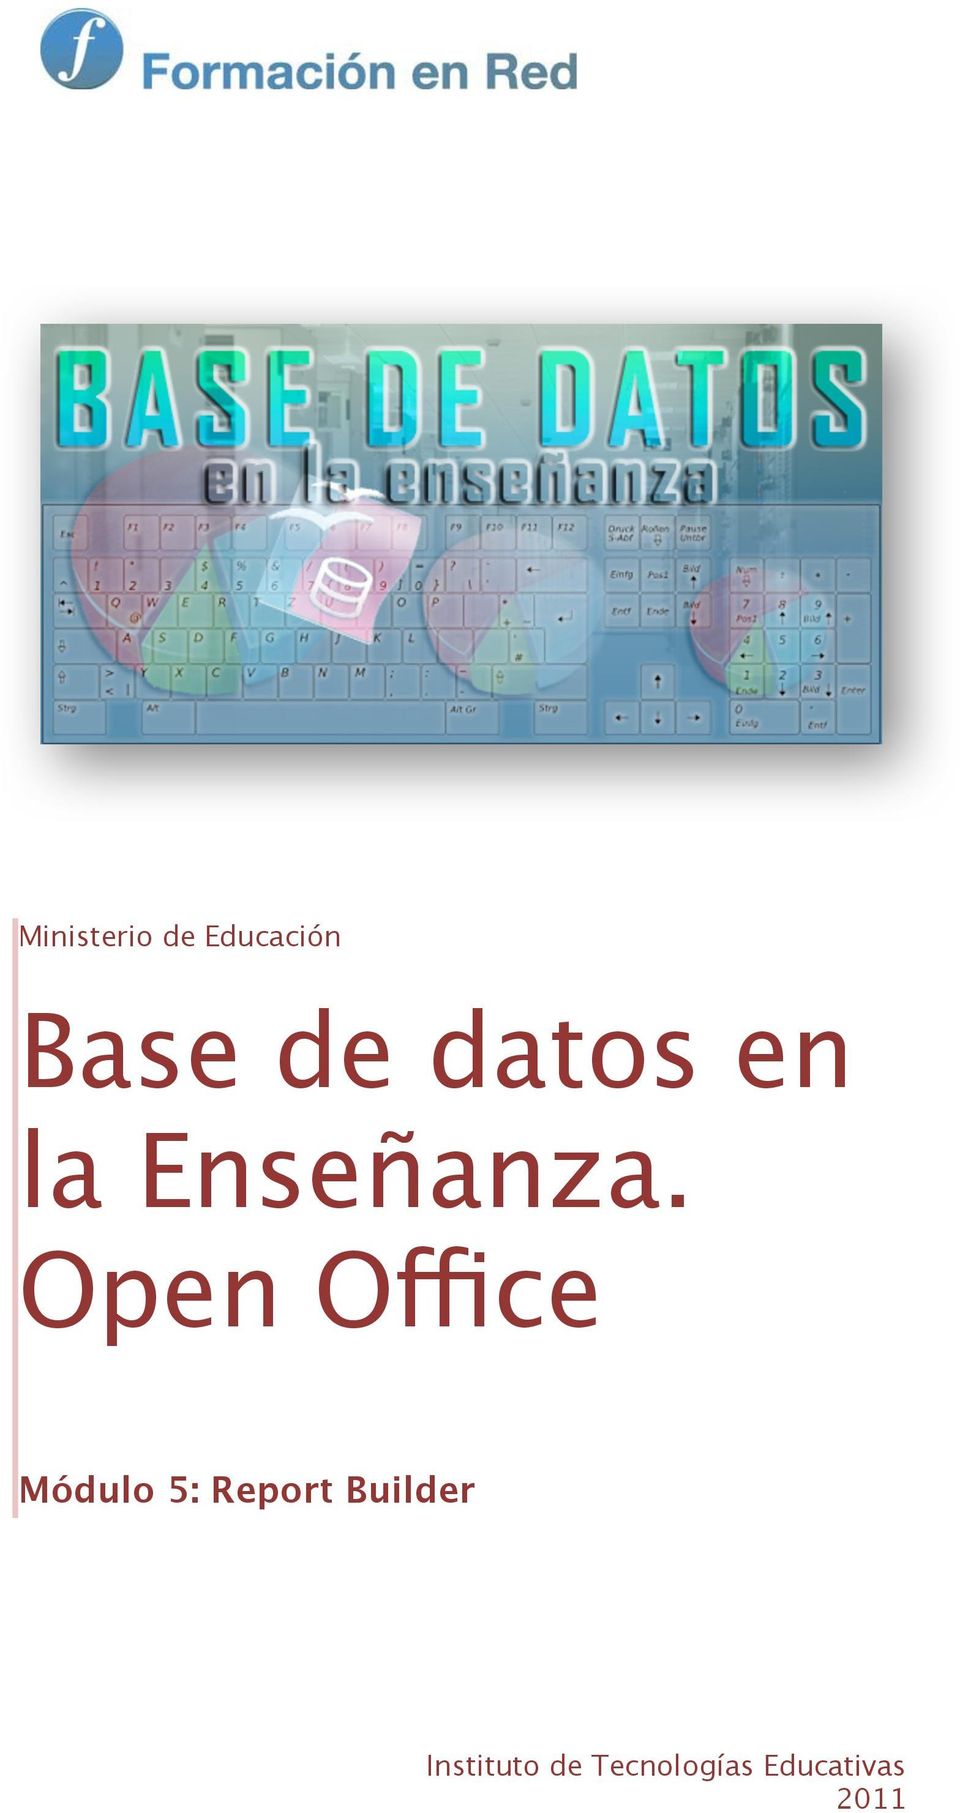 Open Office Módulo 5: Report